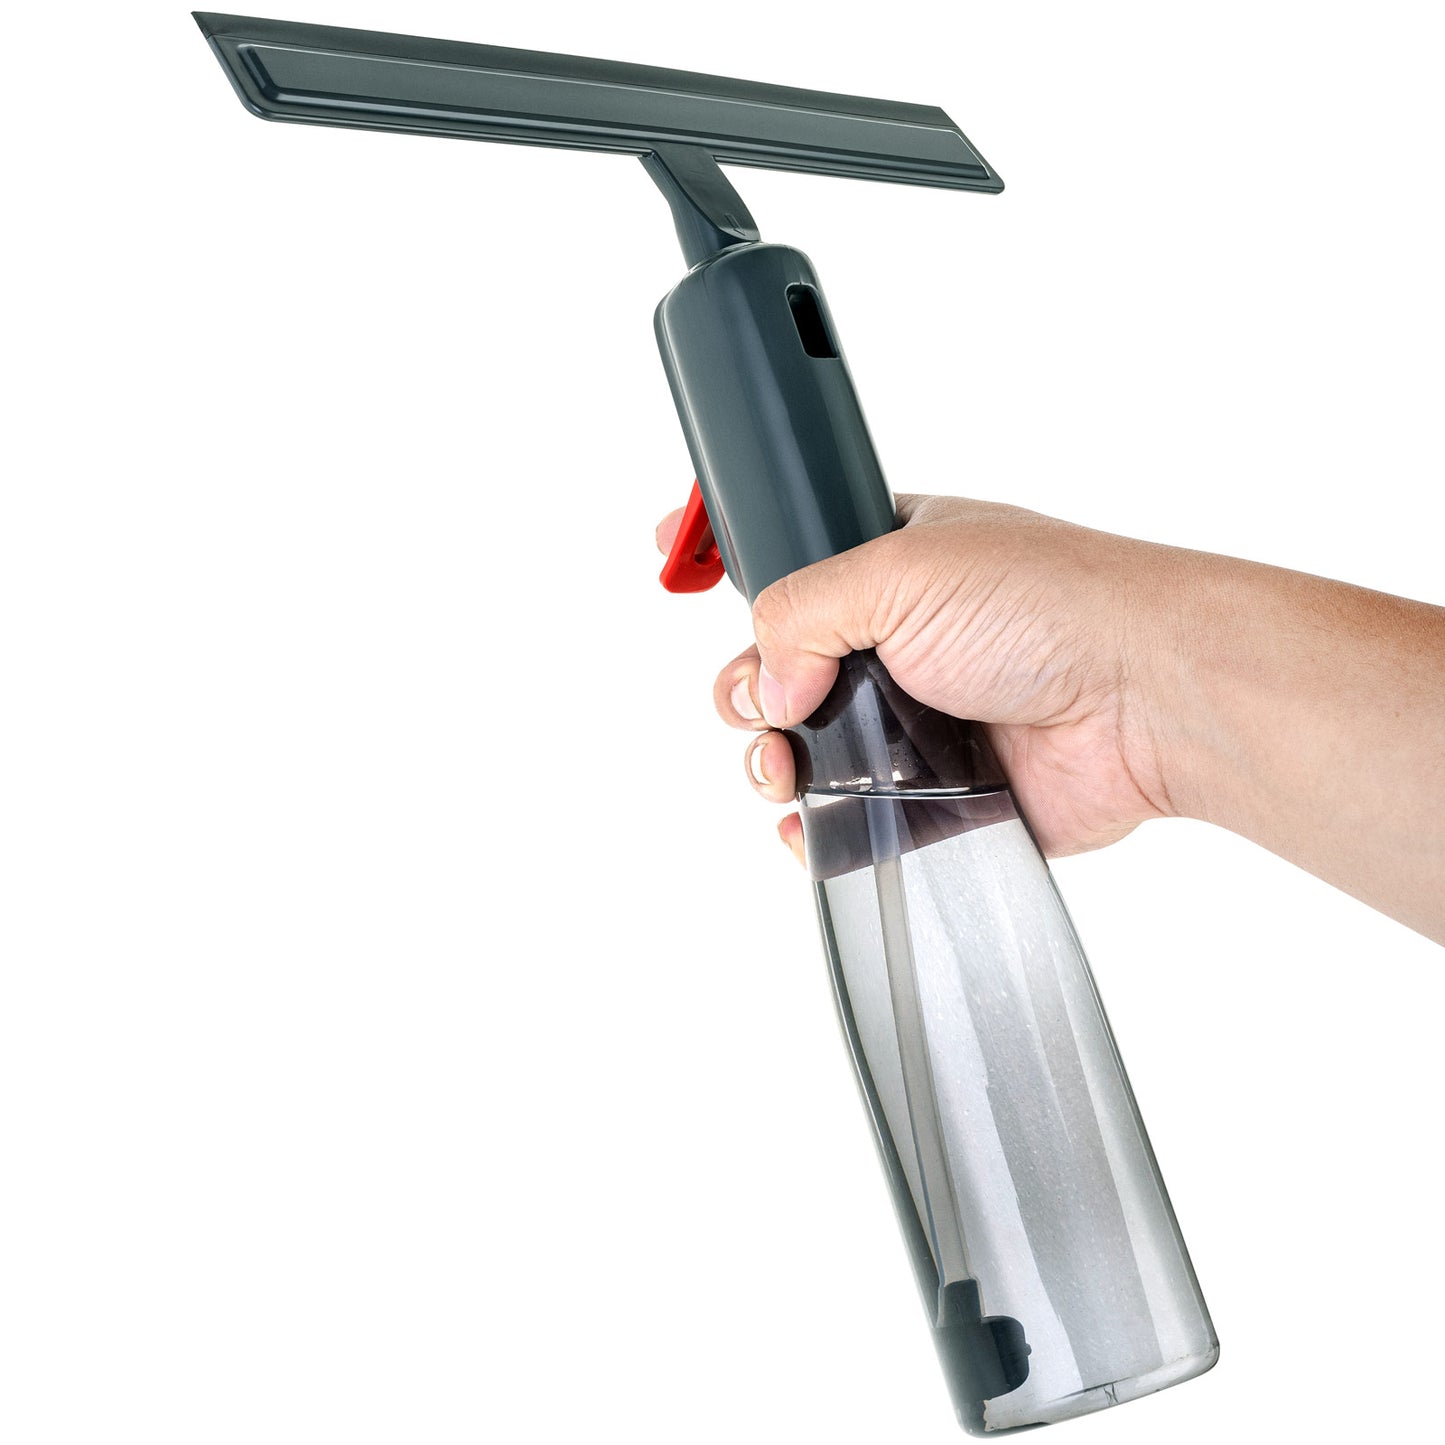 VENETIO ProSweep Spray Mop Refills Replacement Bottle